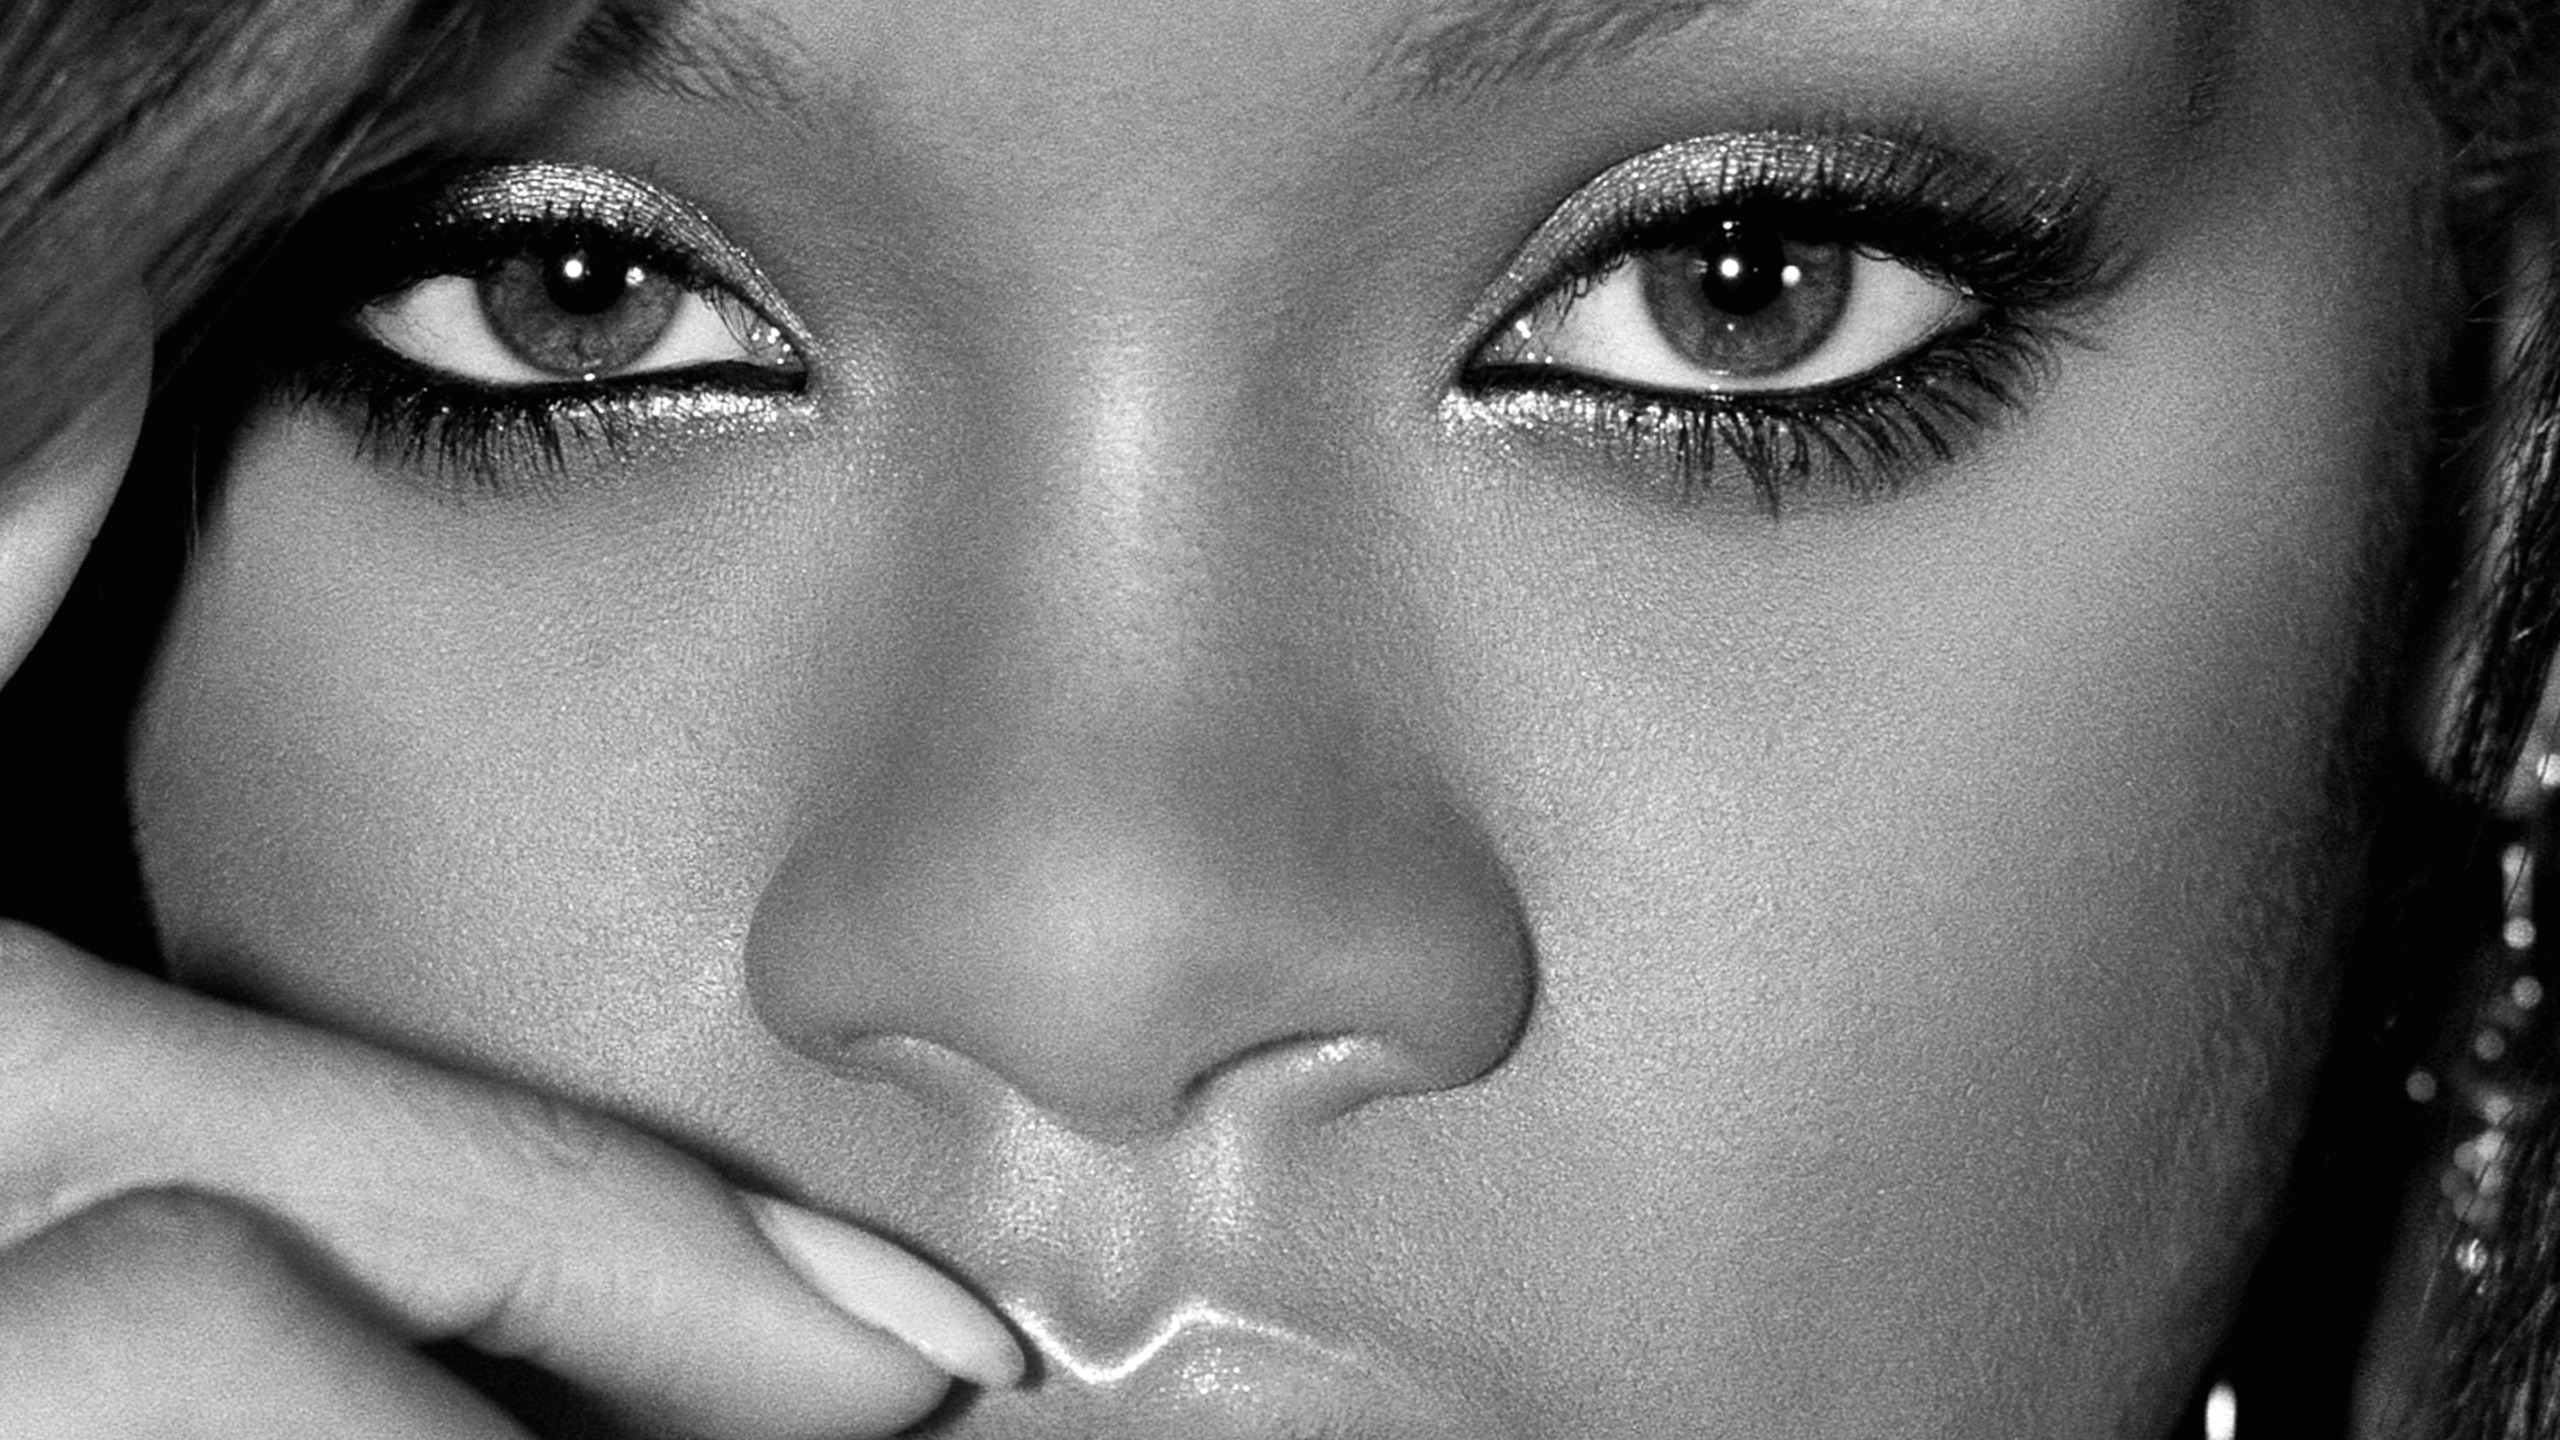 Rihanna Close Up for 2560x1440 HDTV resolution